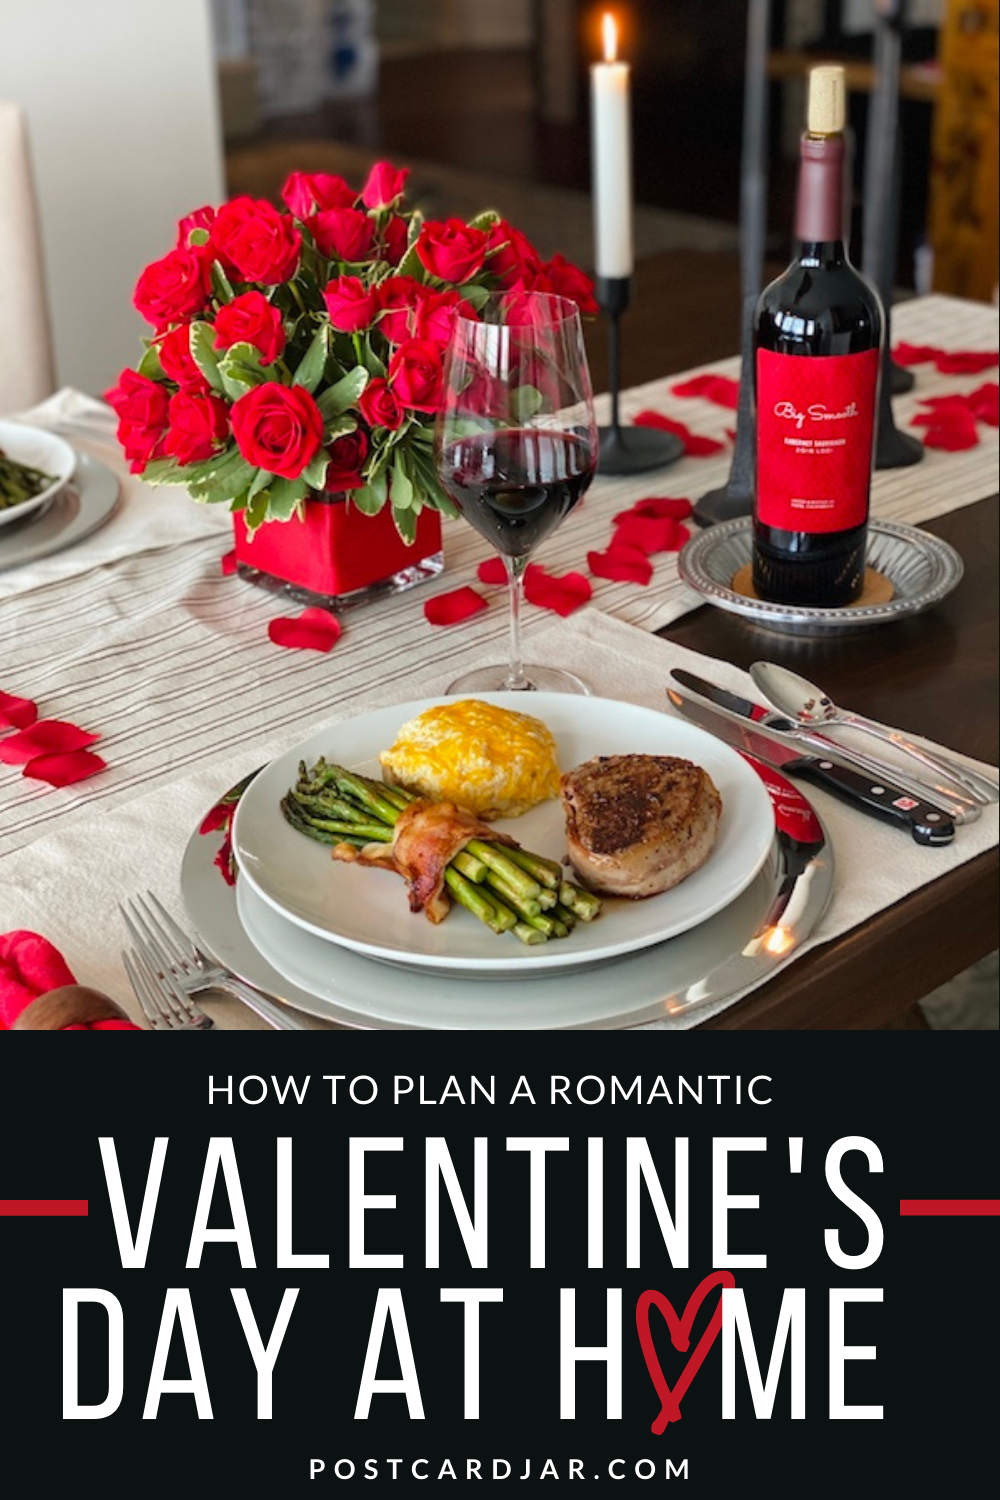 Romantic dinner at home ideas